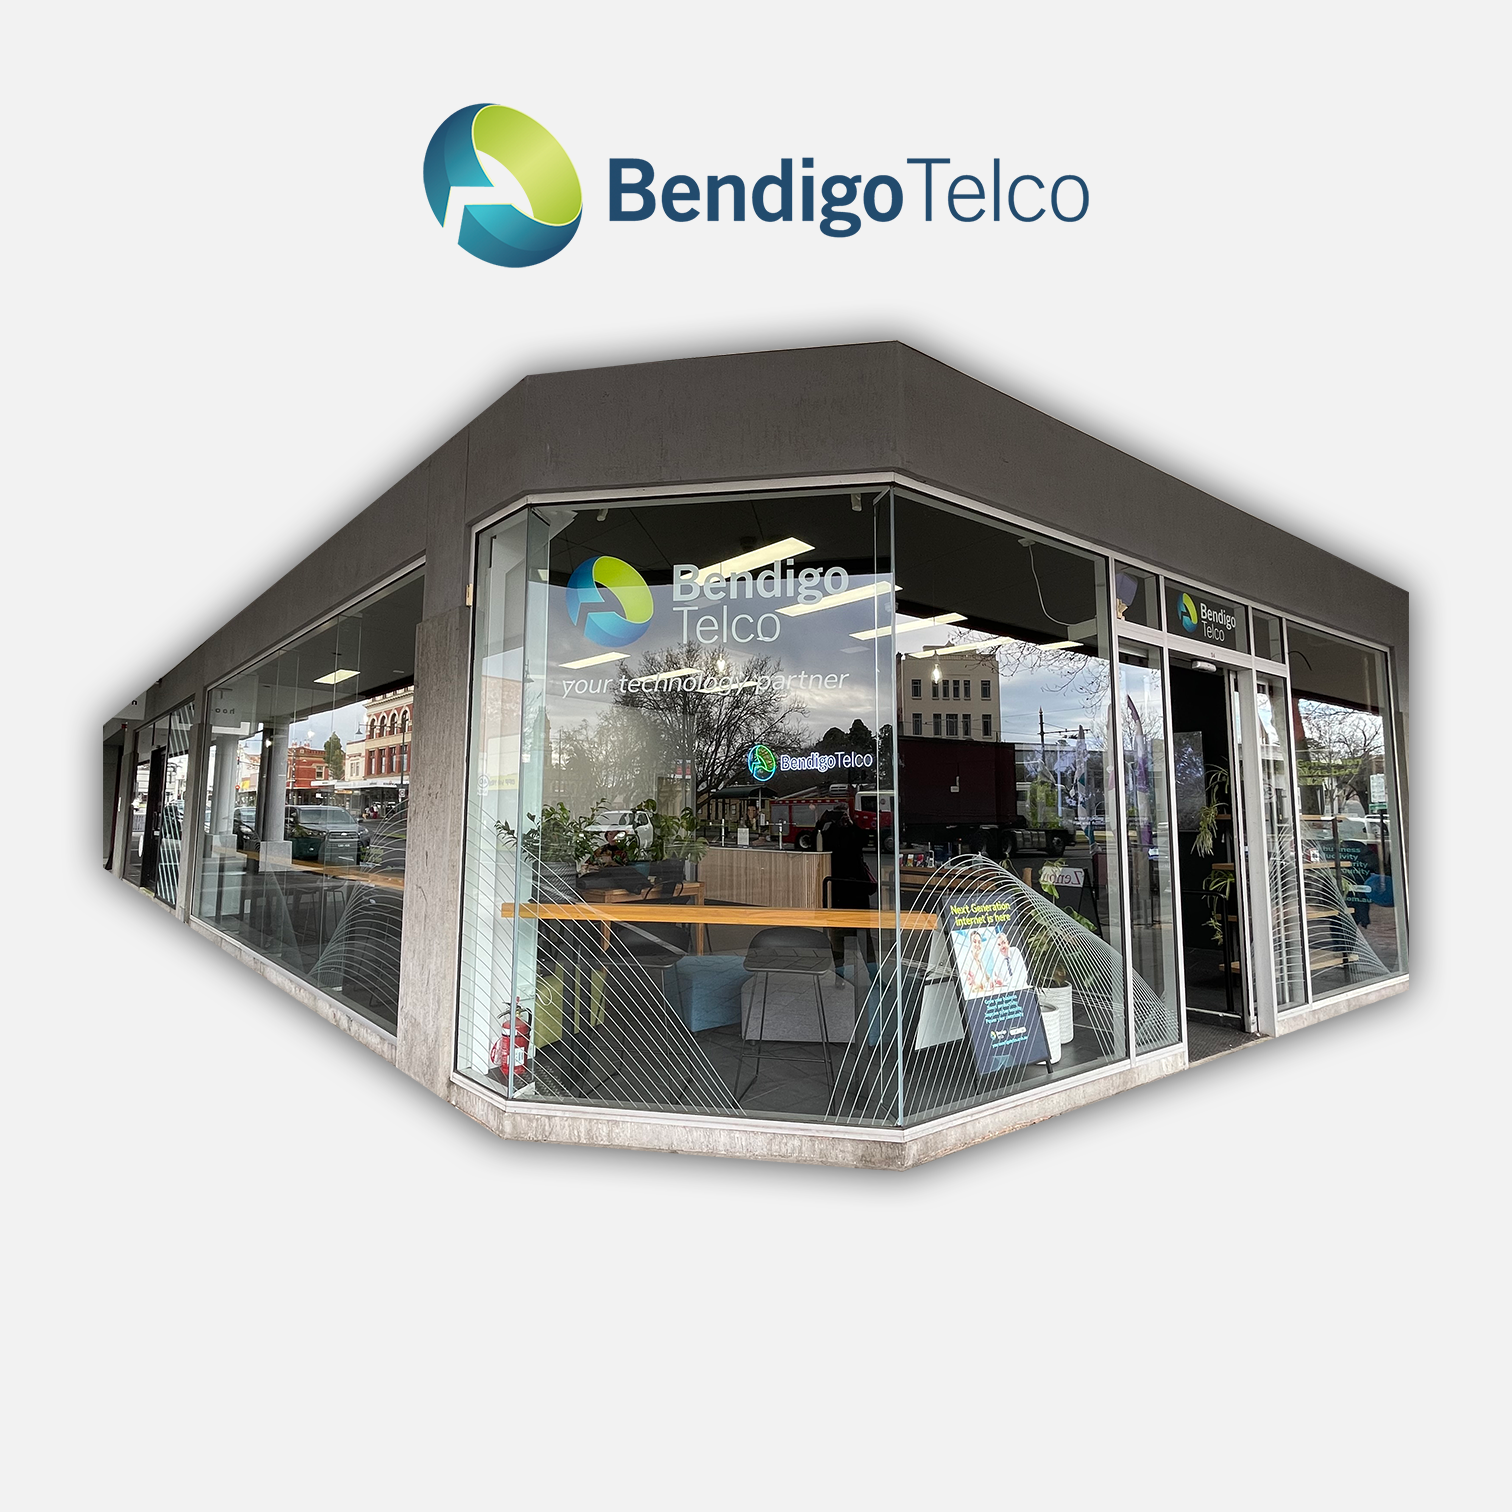 bendigo telco window signage with bendigo telco logo in centre of building